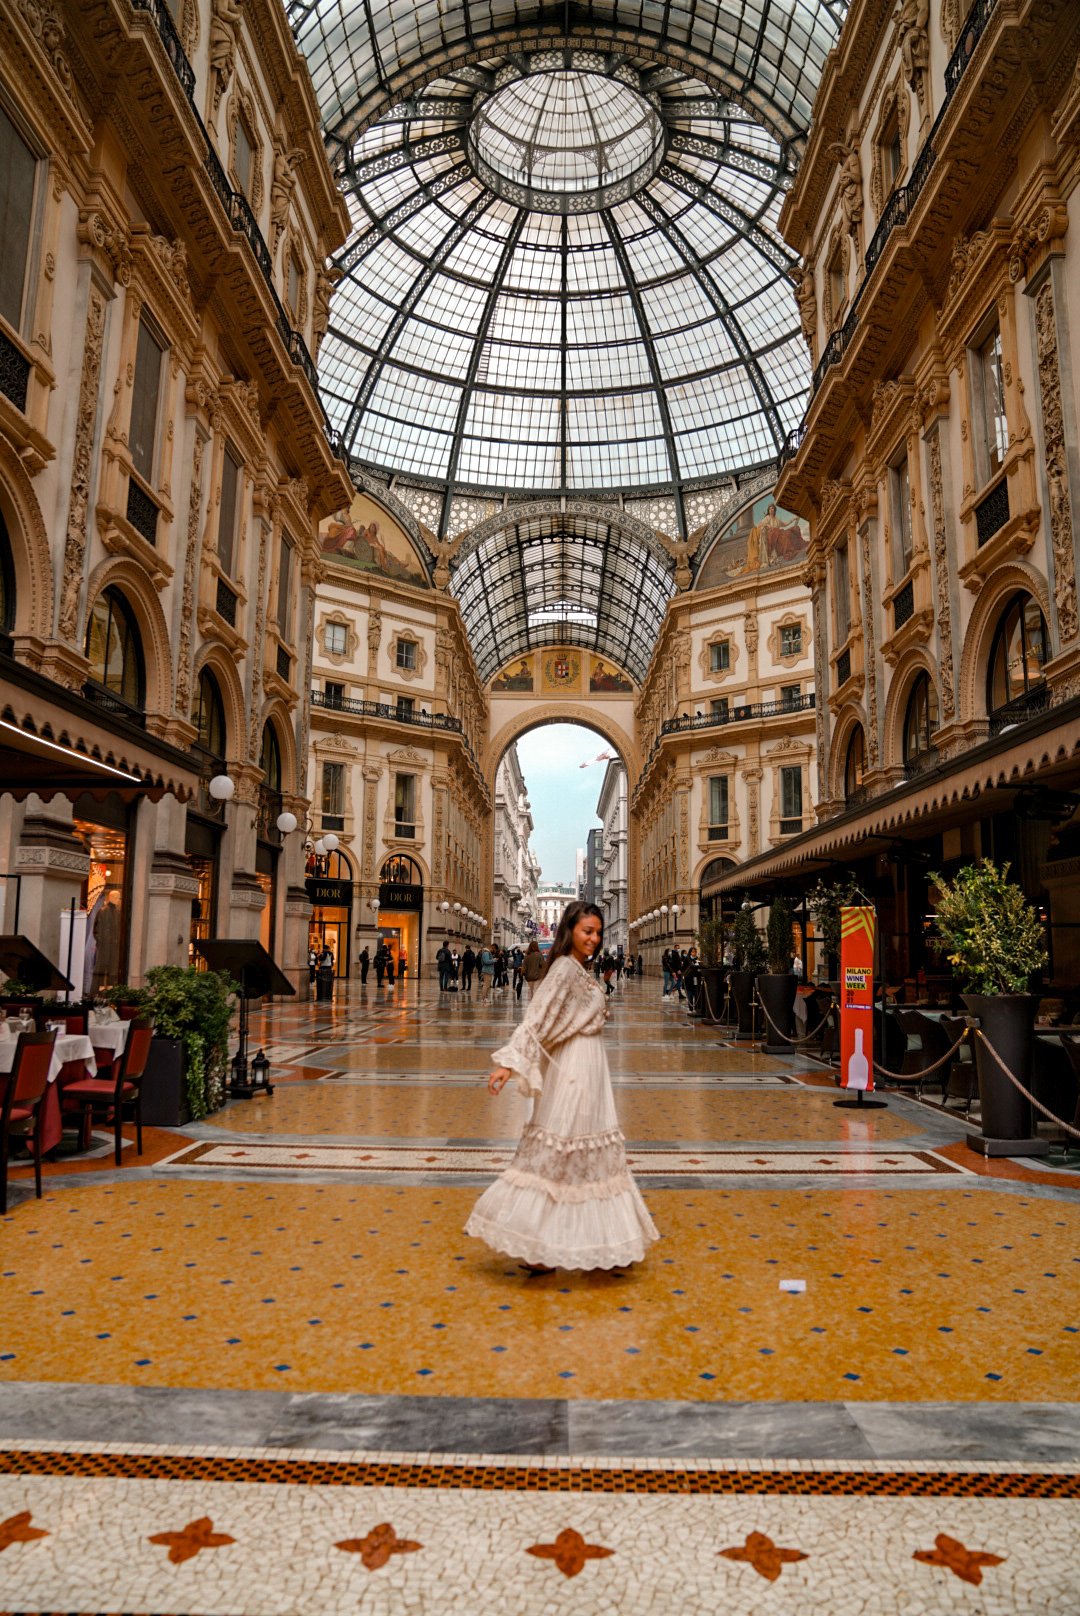 Galleria Vittoria- what to do in Milan